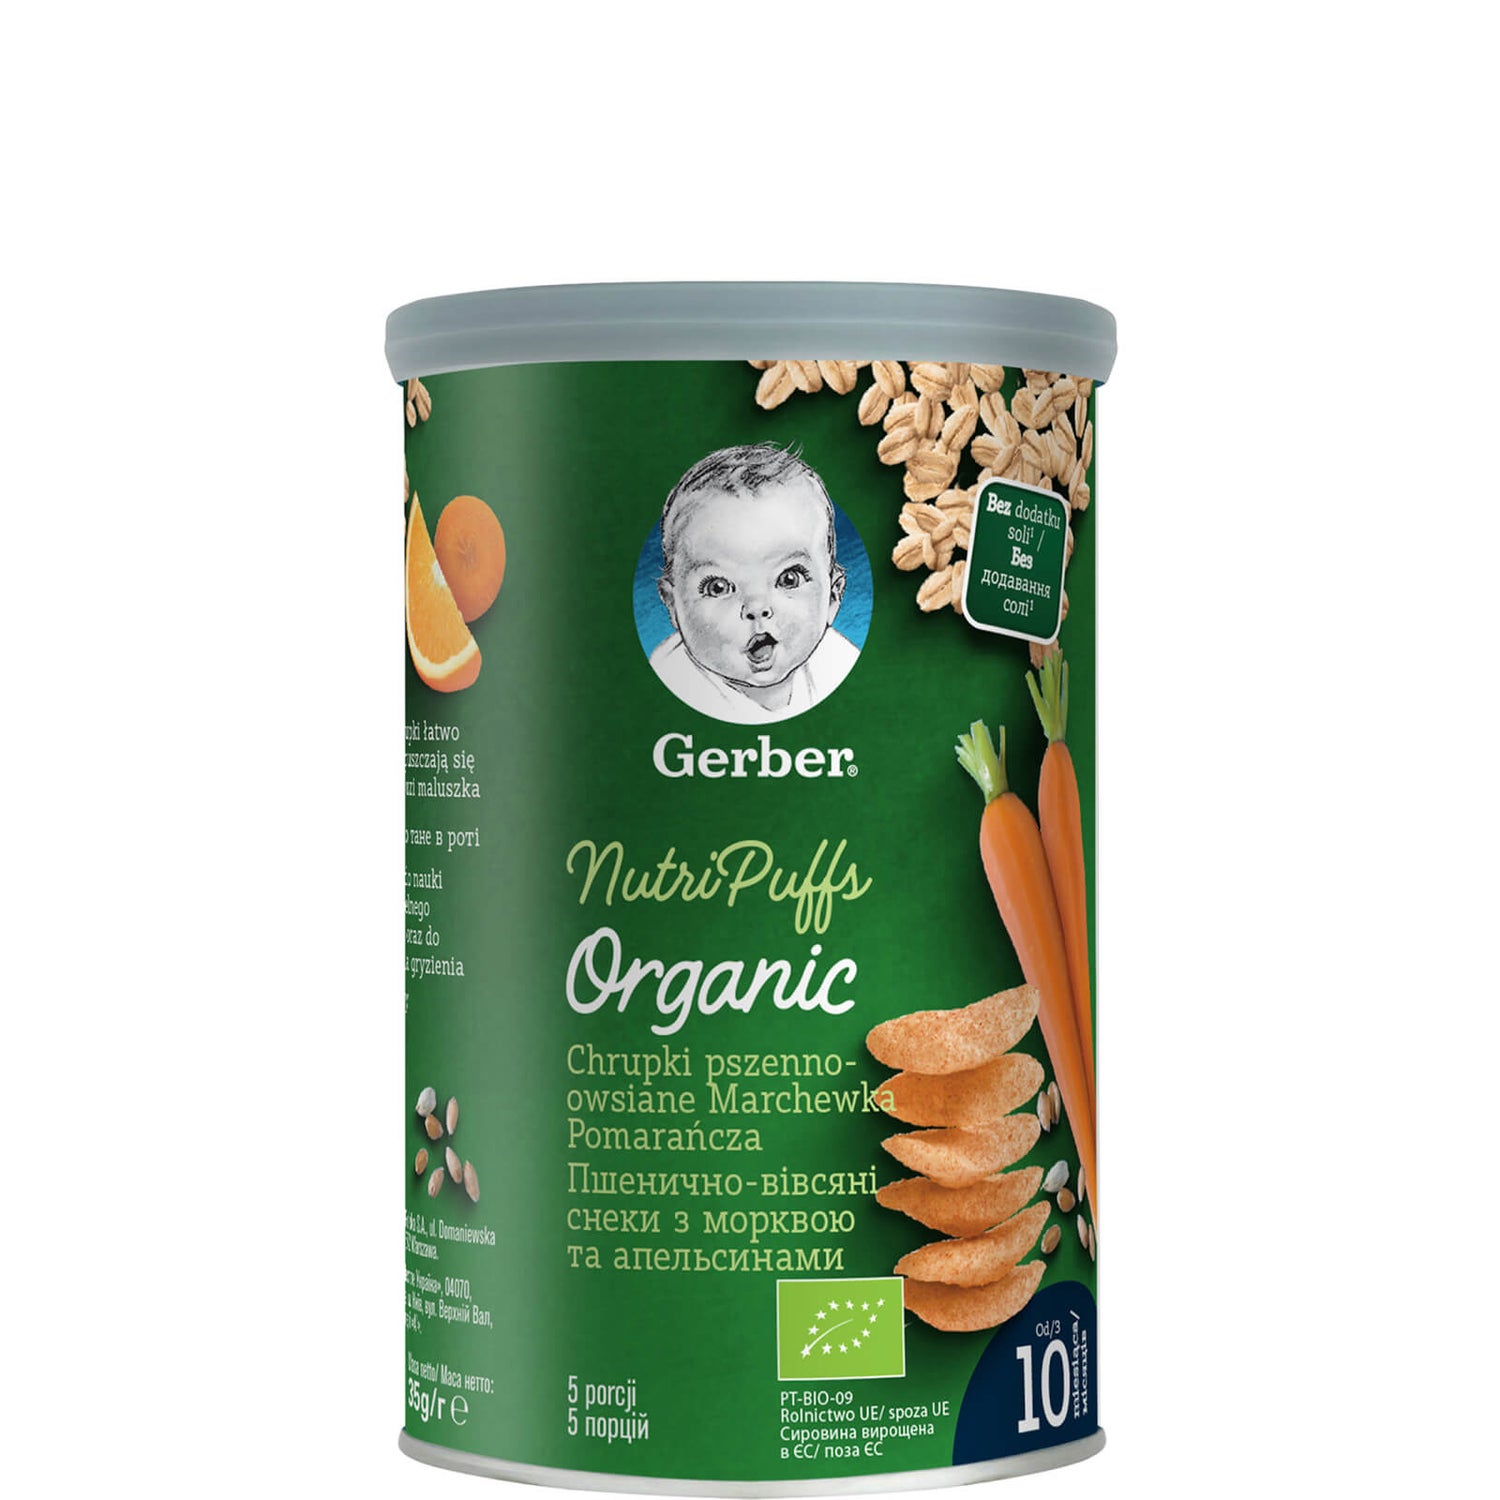 Gerber Organic Chrupki Pszenno-Owsiane Marchewka Pomarańcza - 35g